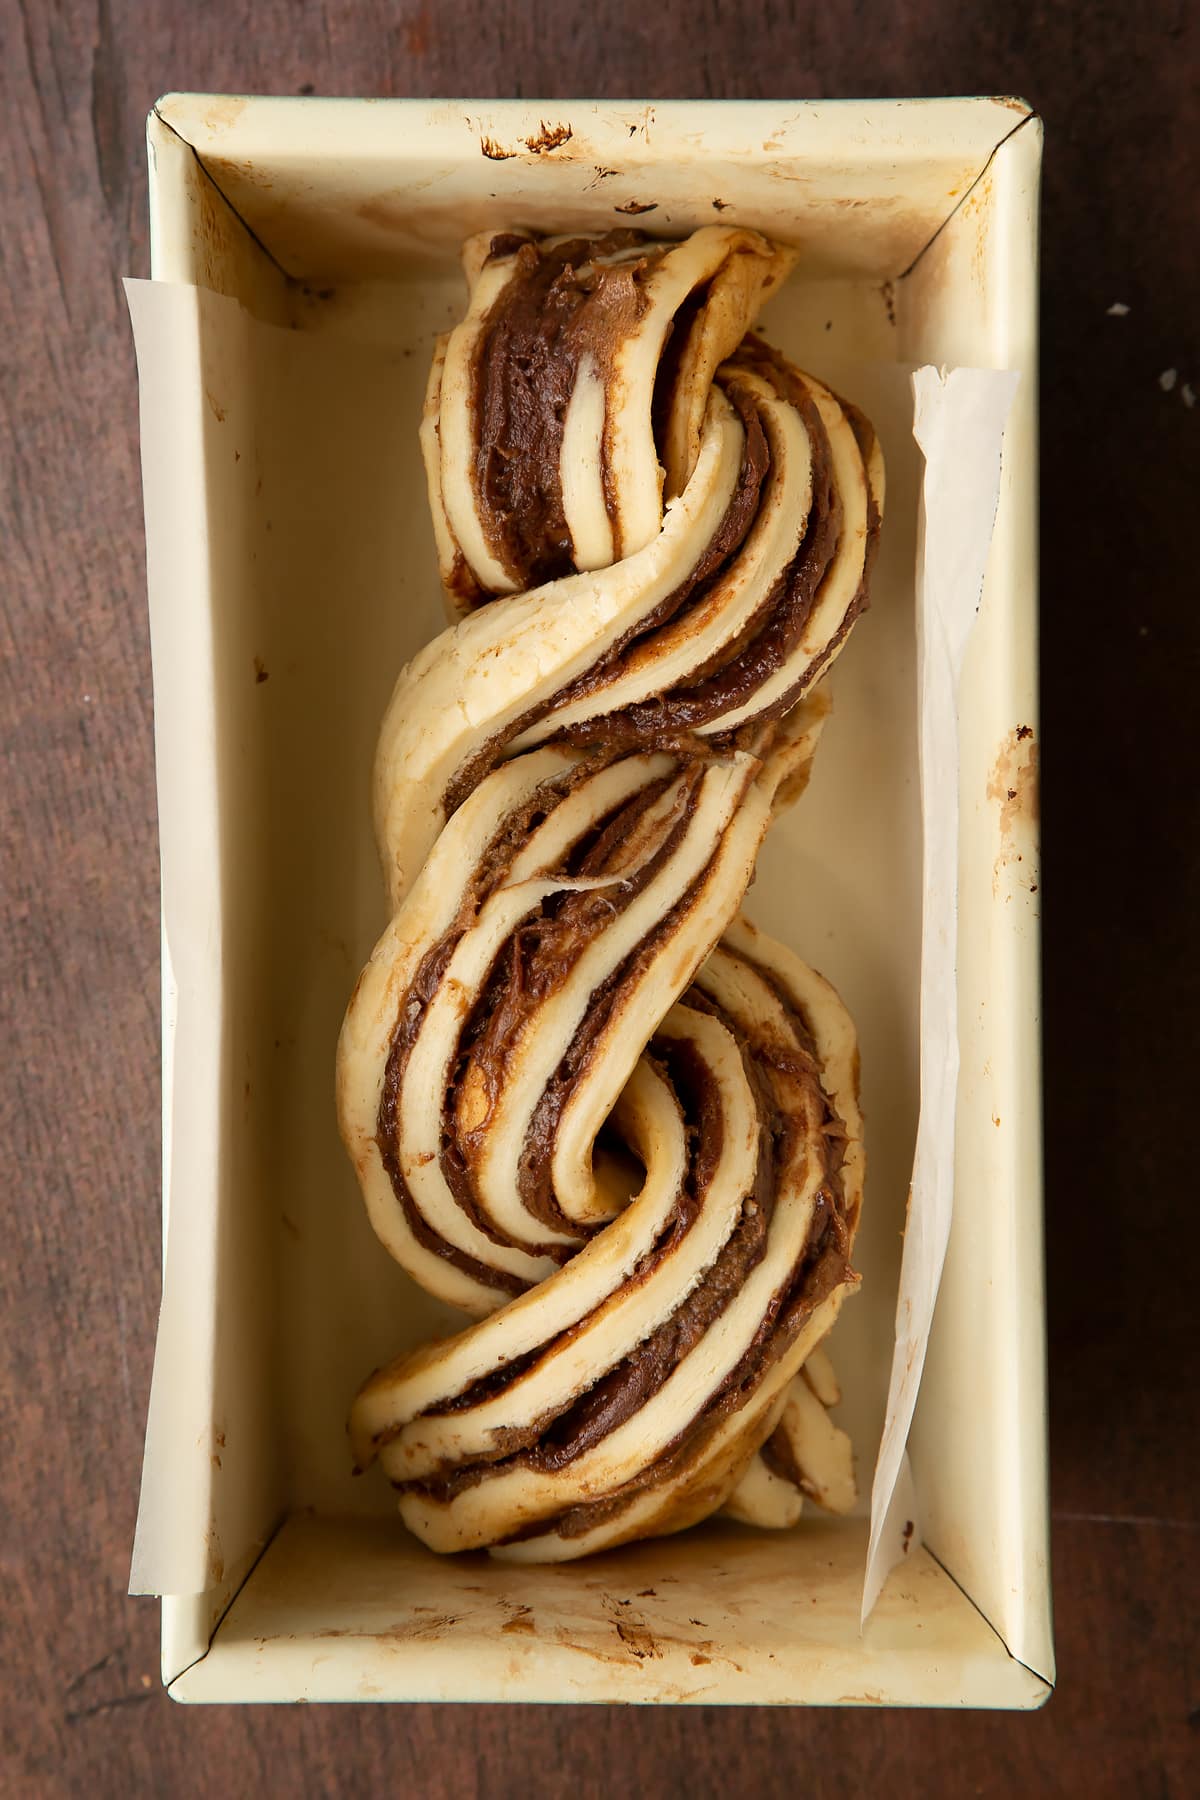 Twisted cinnamon swirl babka dough in a lined baking tin.